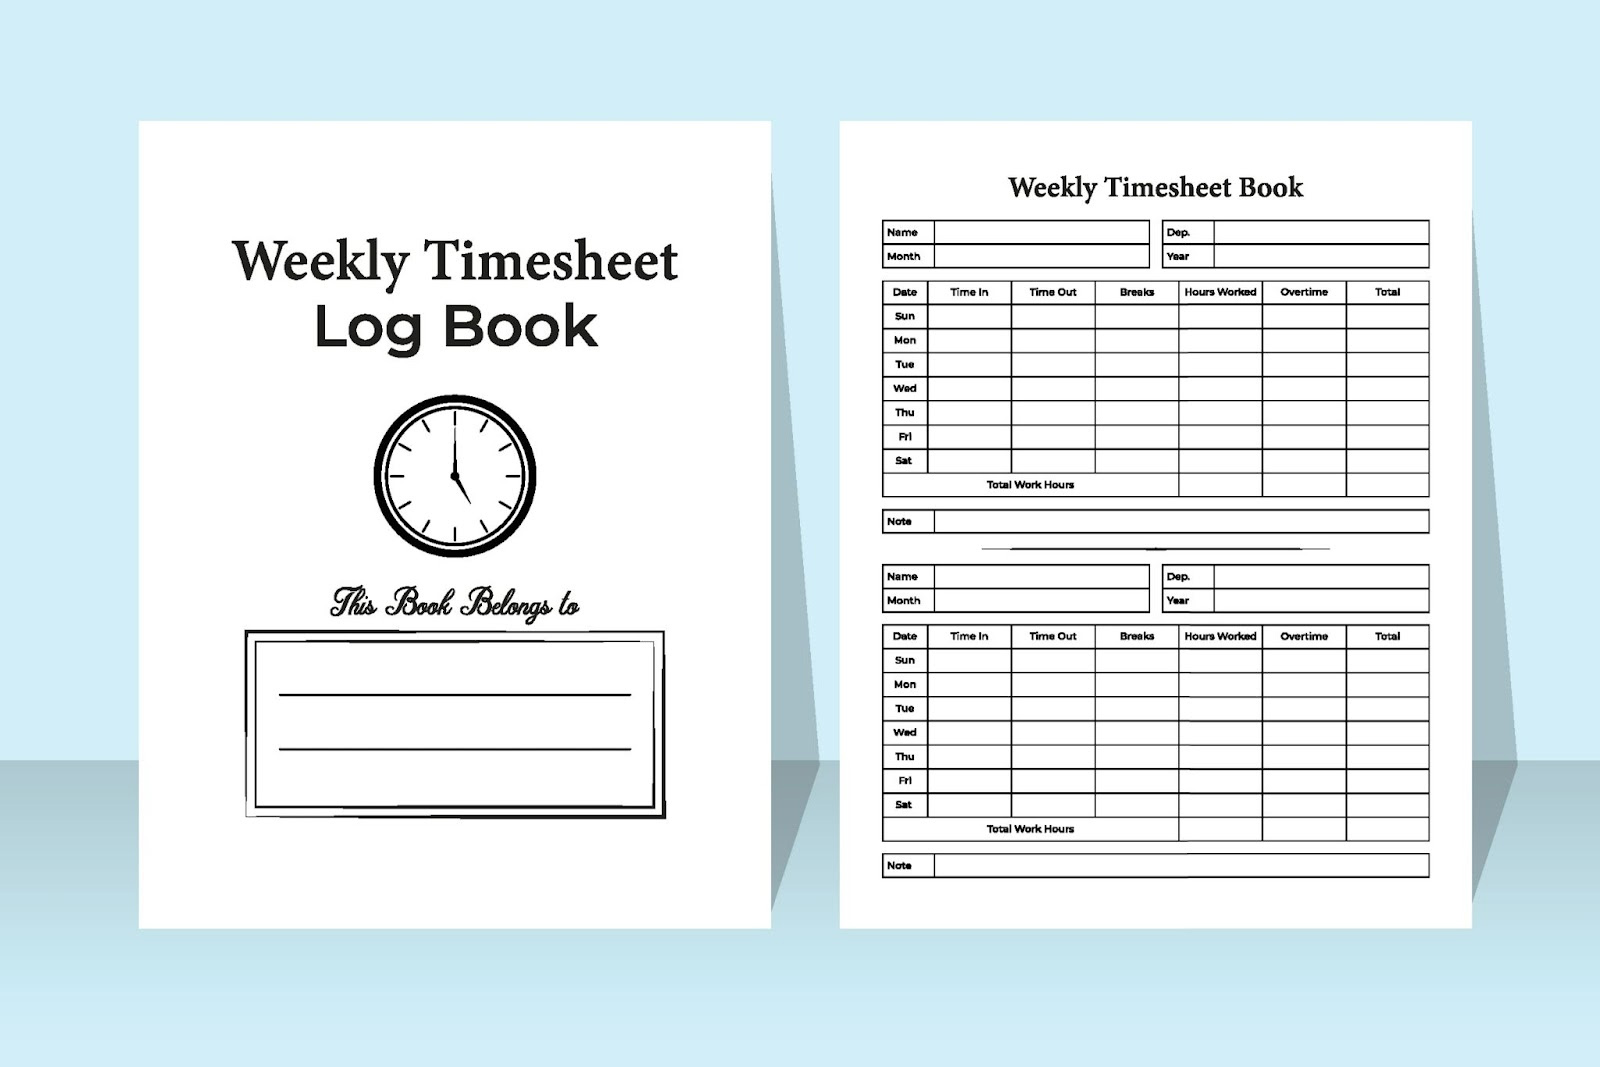 Weekly timesheet log book interior.